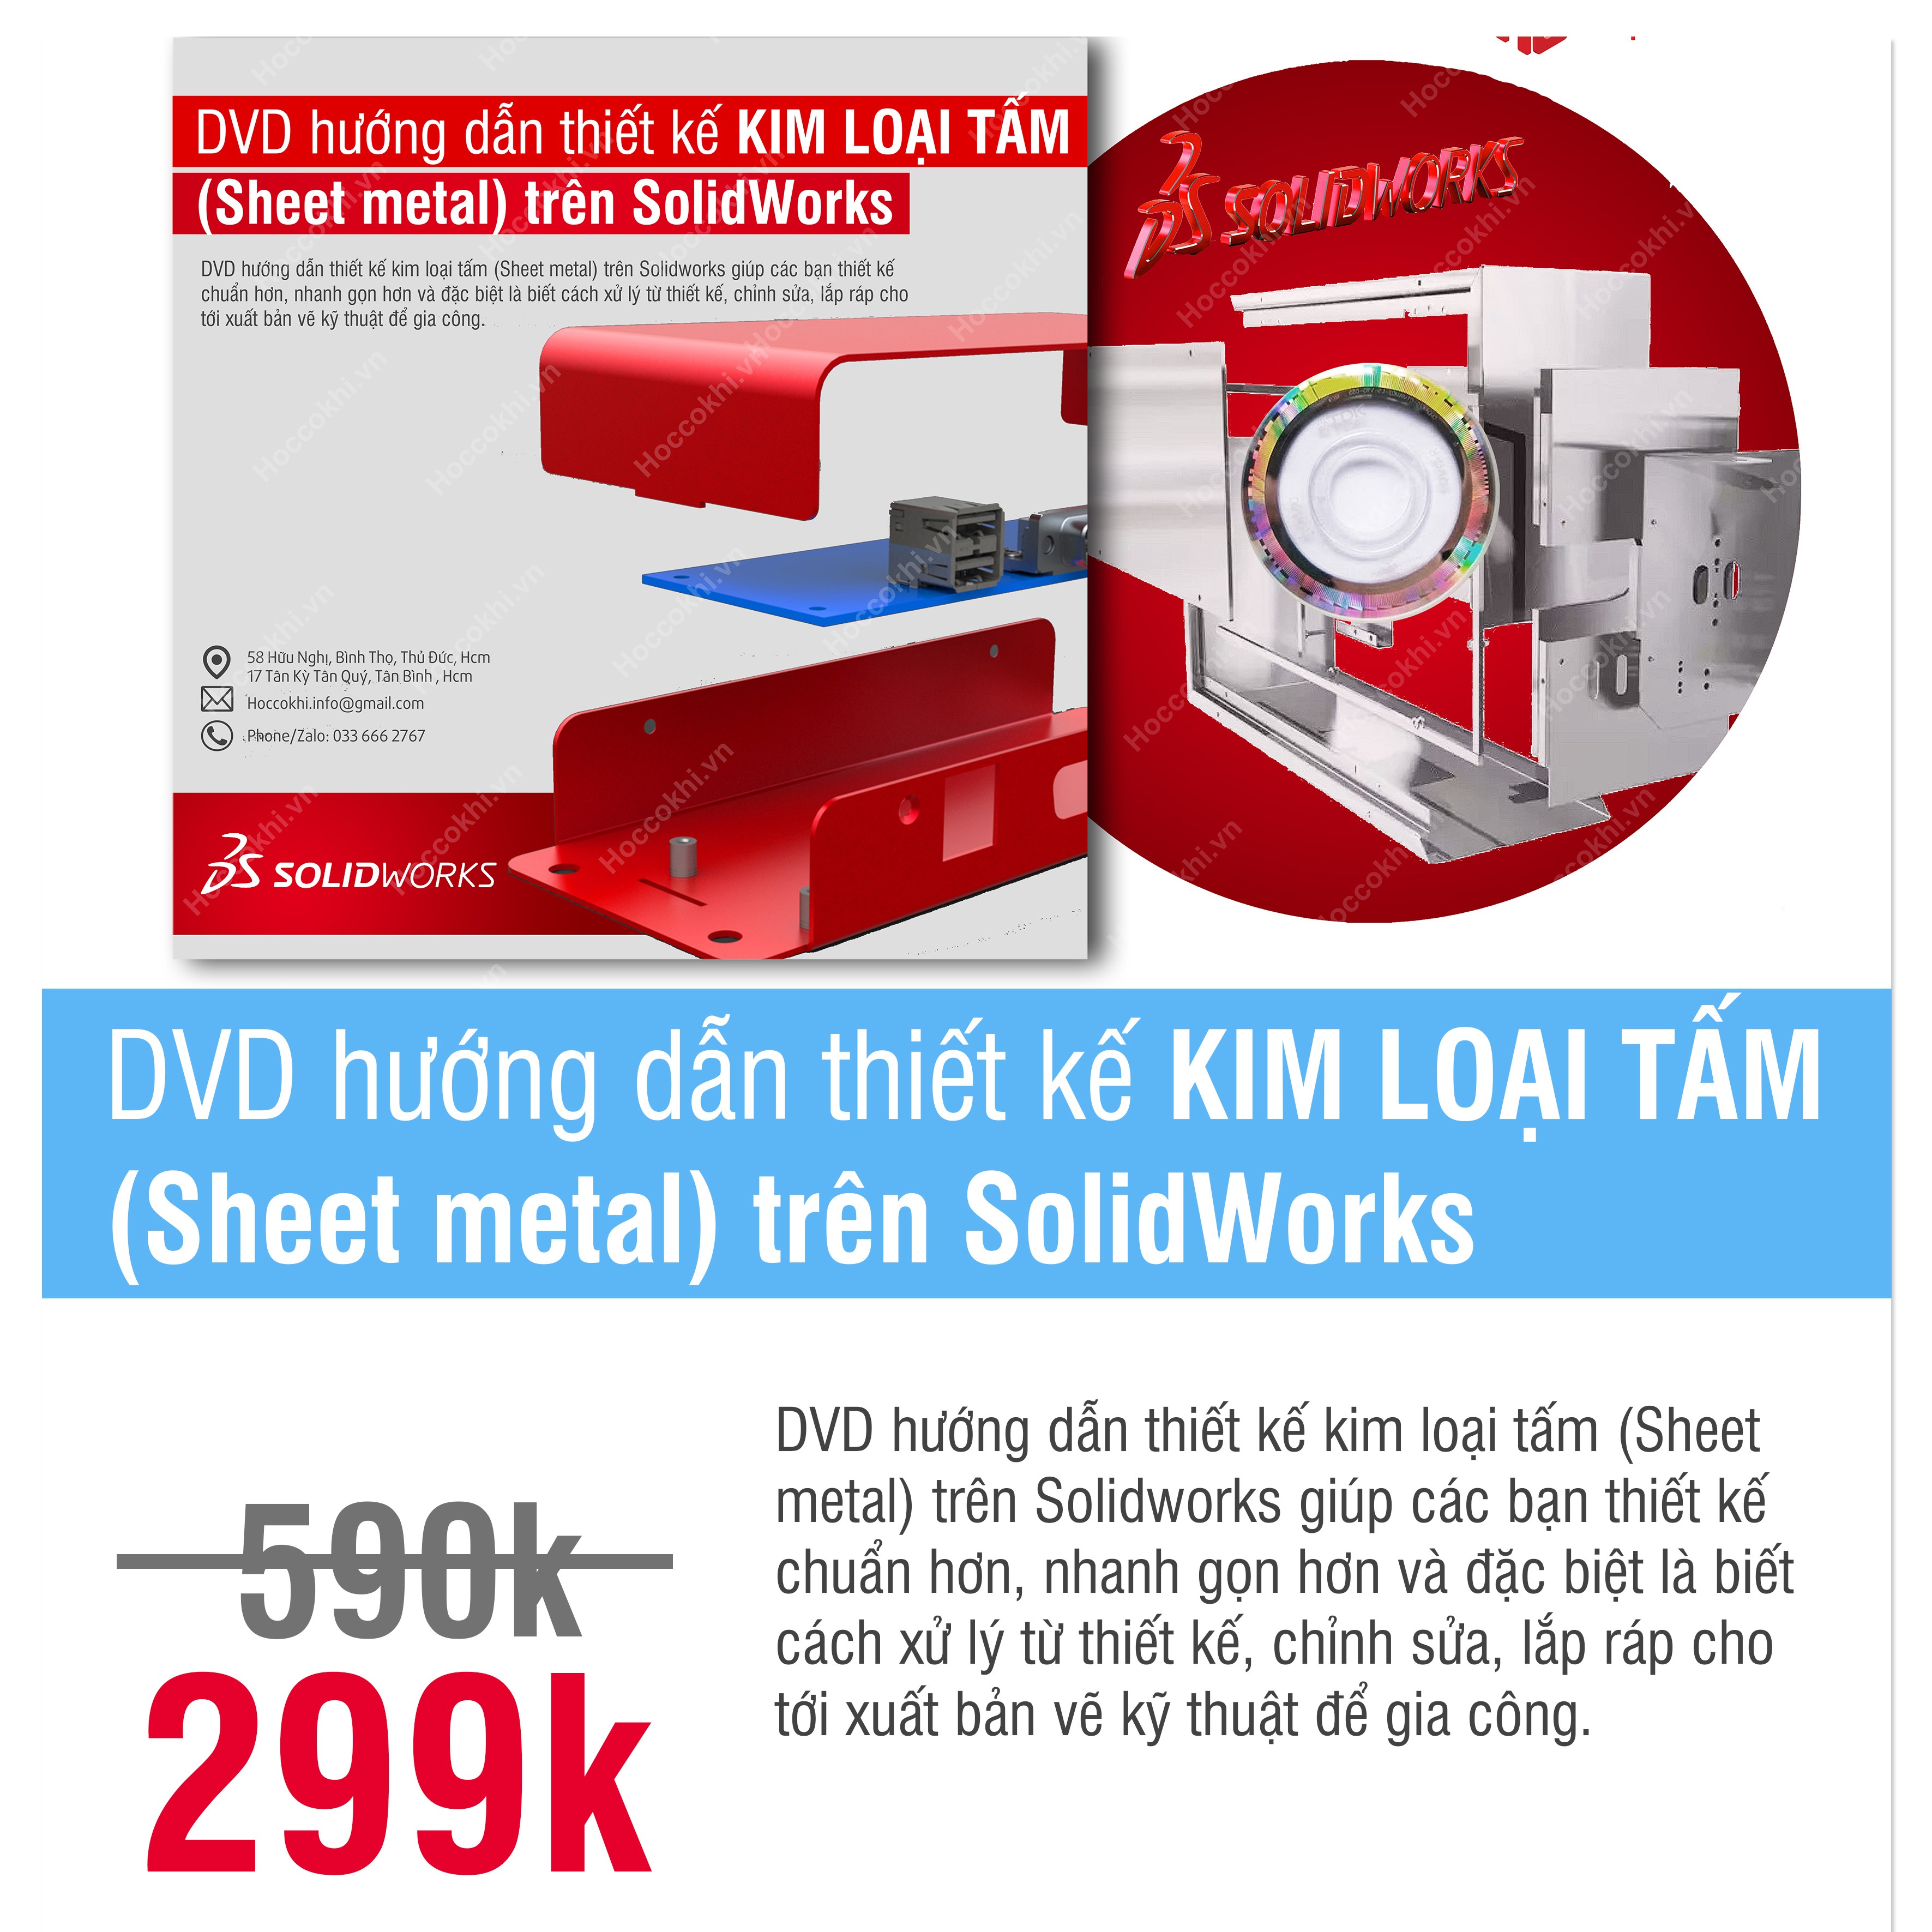 DVD hướng dẫn thiết kế kim loại tấm (Sheet metal) trên SolidWorks